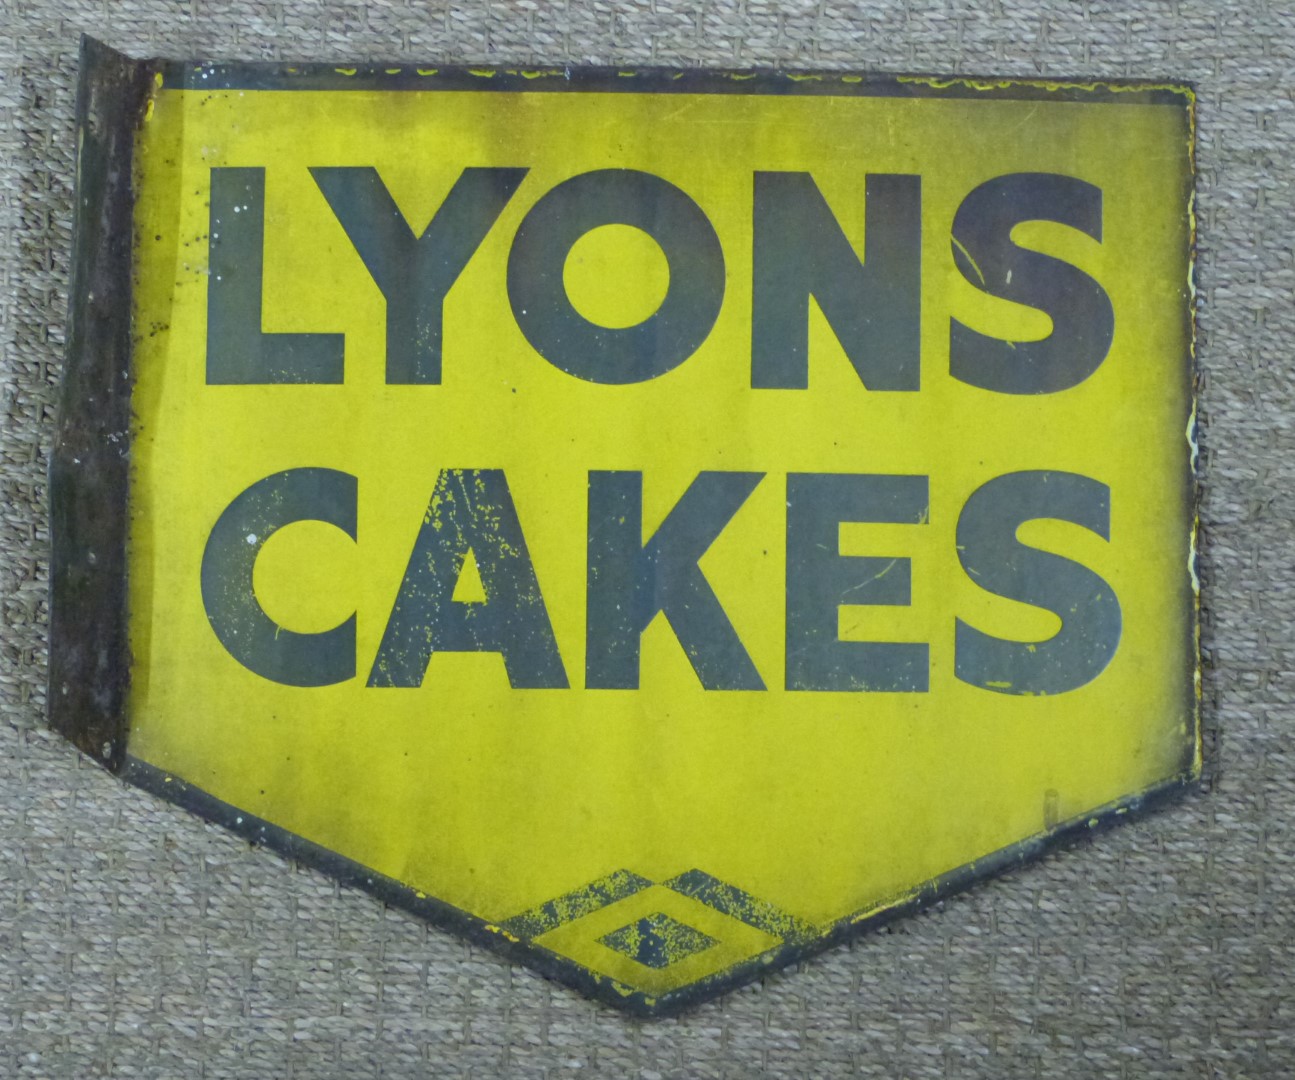 Lyons Cakes double sided vintage enamel advertising sign, 39.5 x 44cm